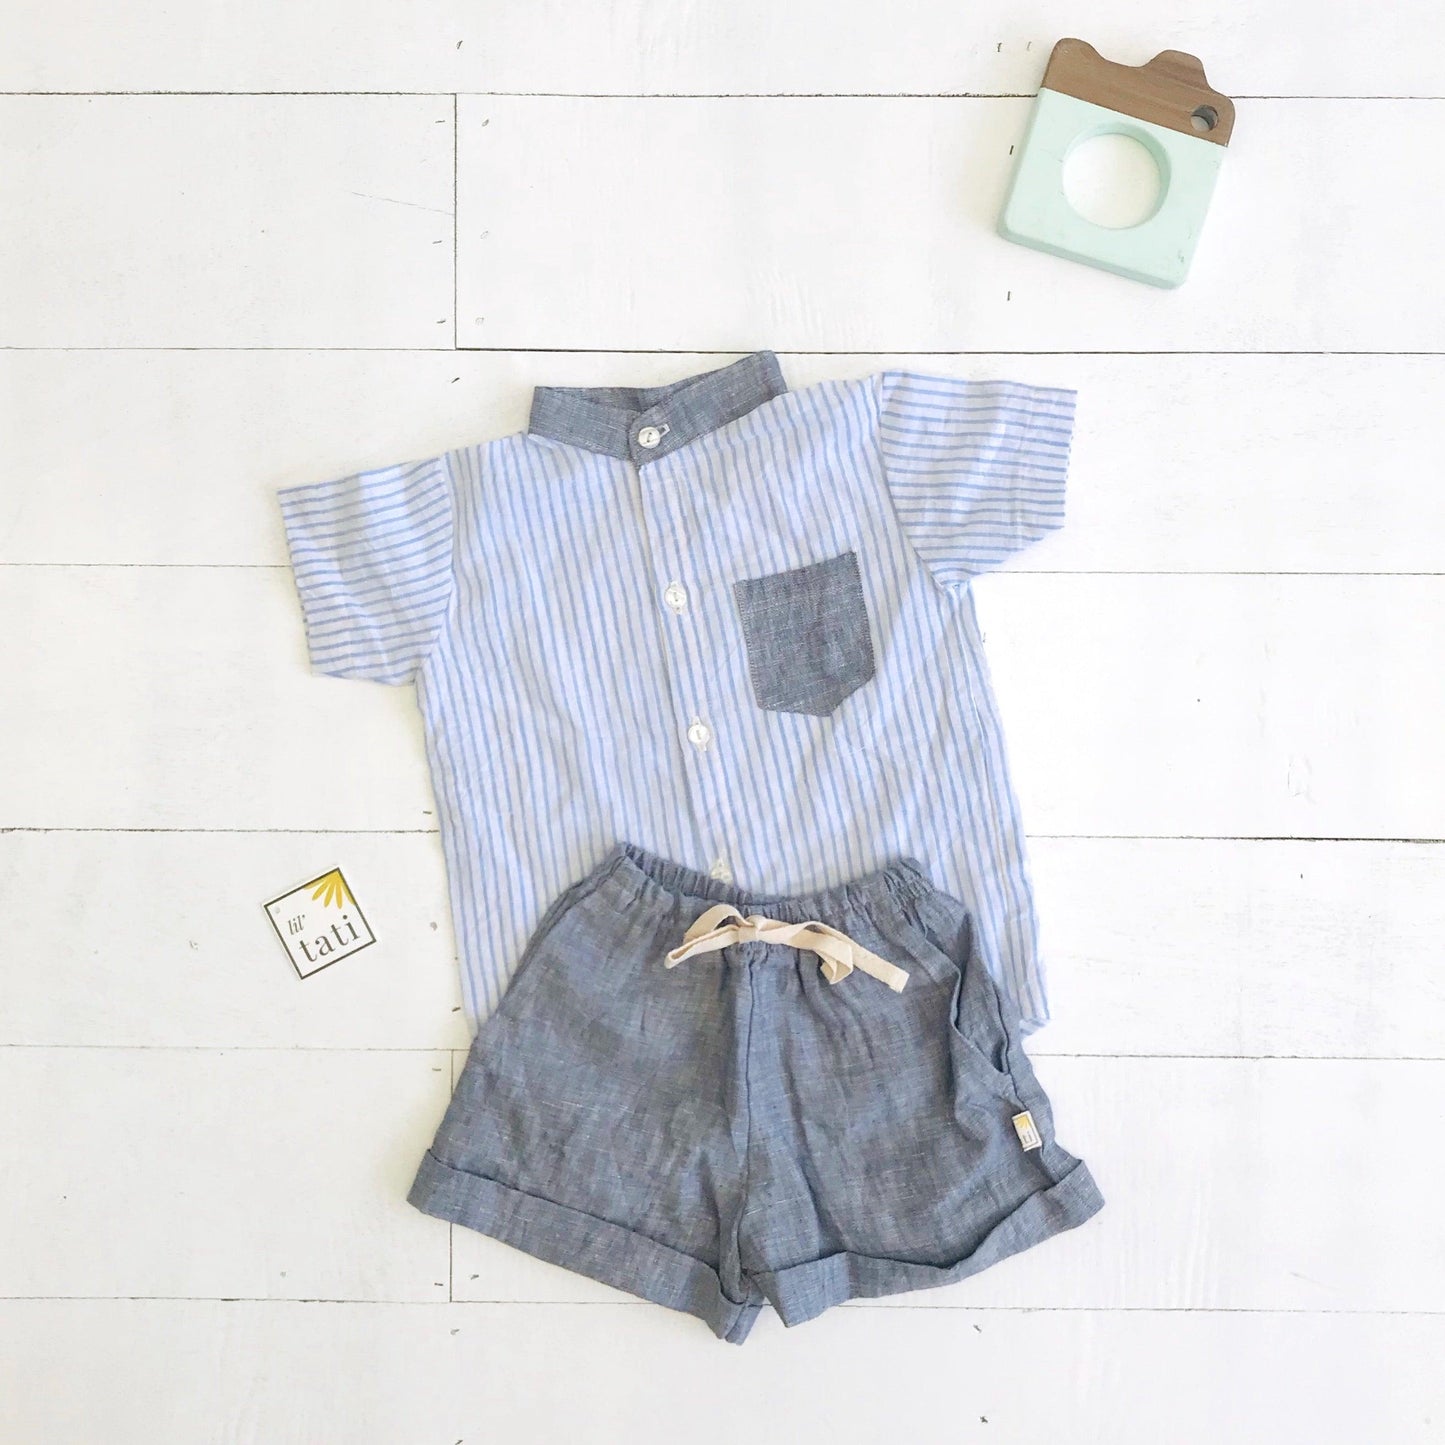 Cedar Top & Shorts in Placid Blue Stripes Linen and Gray Linen - Lil' Tati